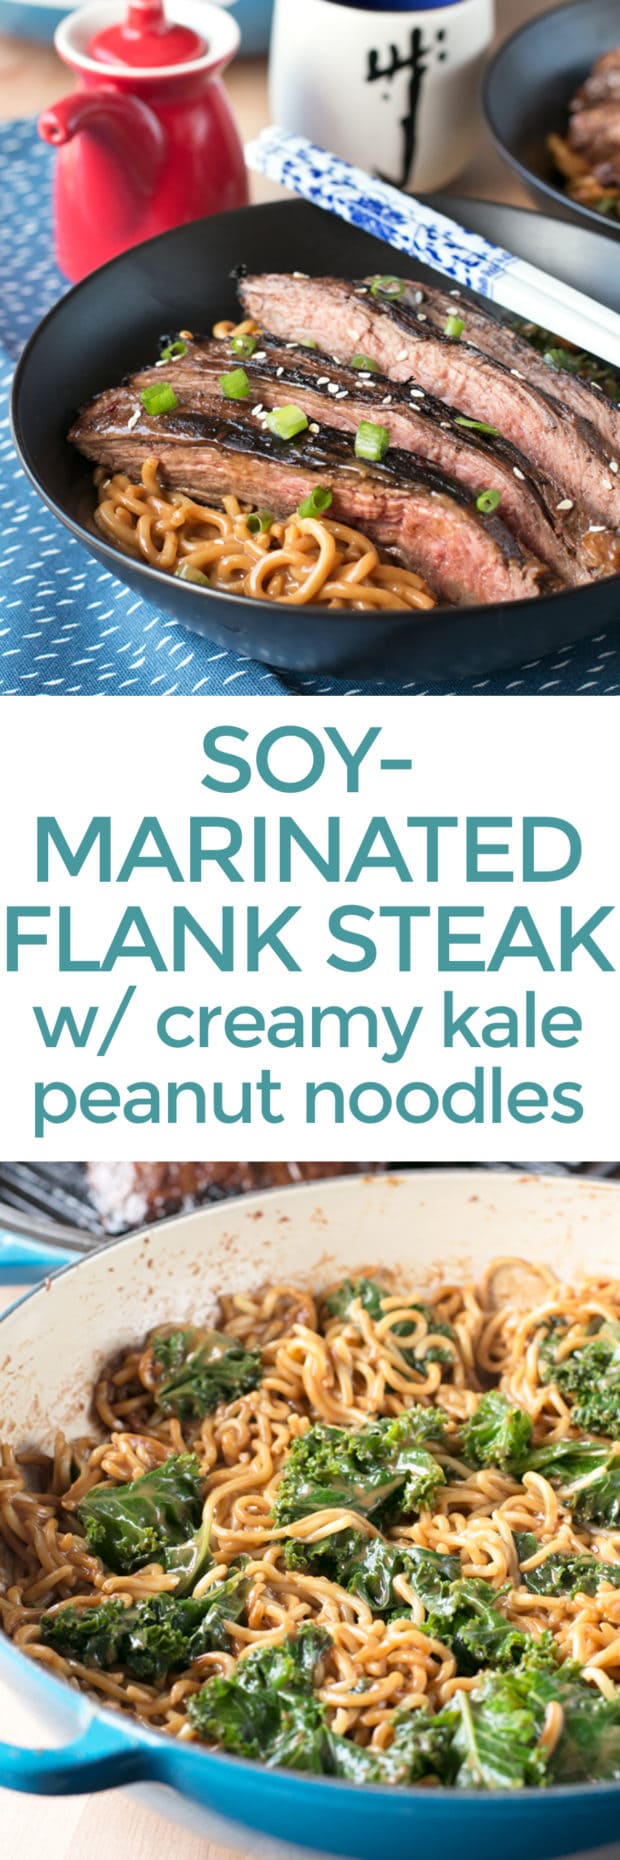 Soy Marinated Flank Steak with Creamy Kale Peanut Noodles | cakenknife.com #dinner #datenight #pasta #steak